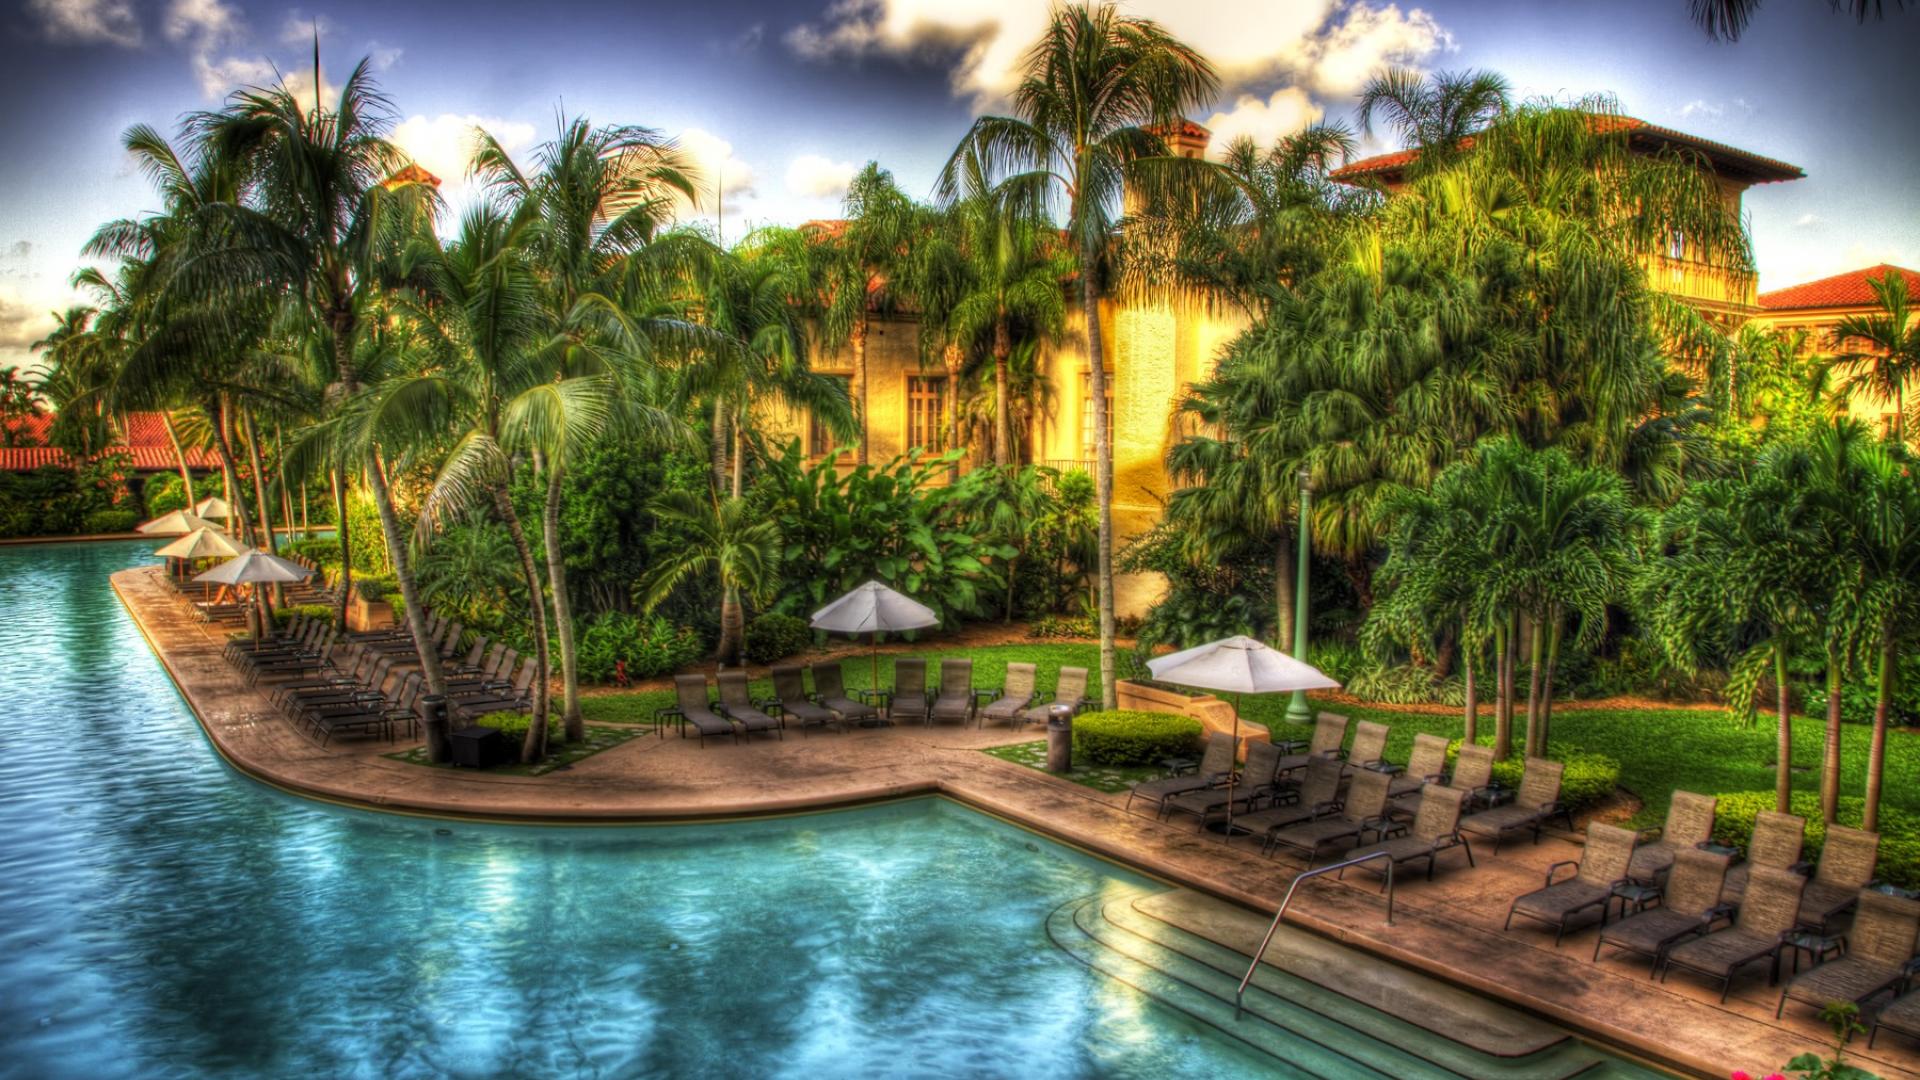 Hdr Hotel Man Made Palm Tree Pool Resort Tropical 1920x1080